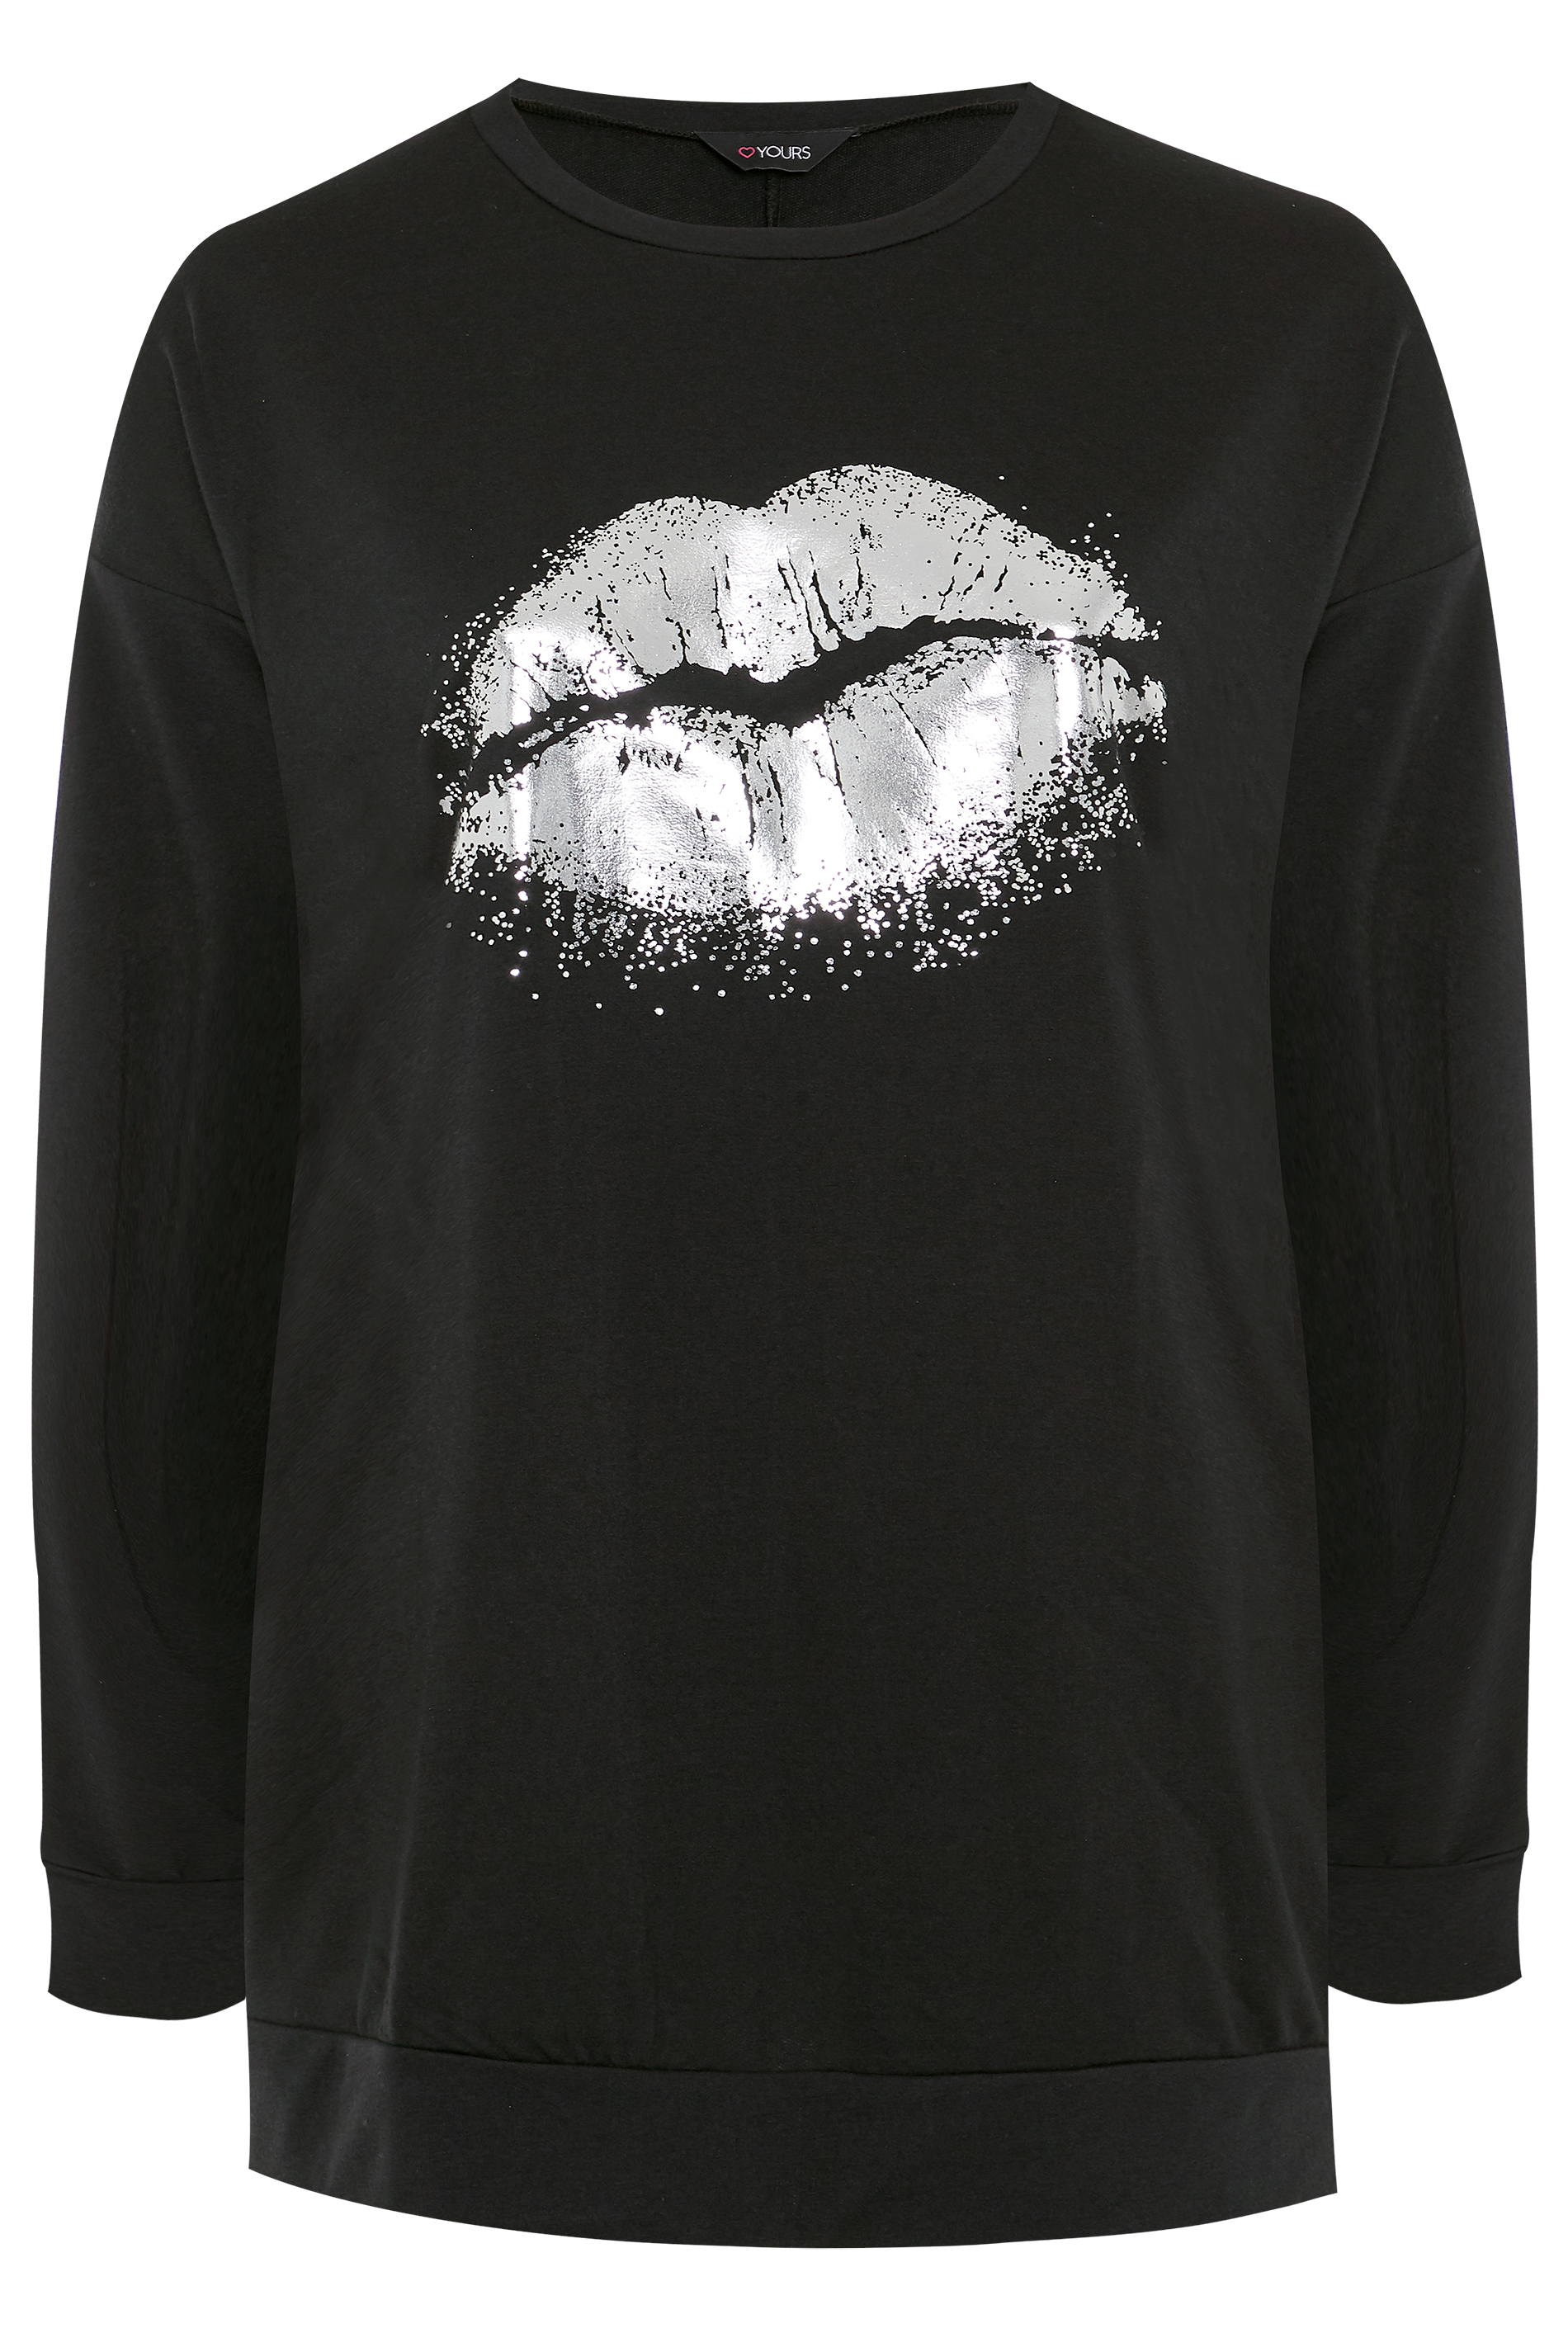 Black Foil Lips Print Sweatshirt | Yours Clothing